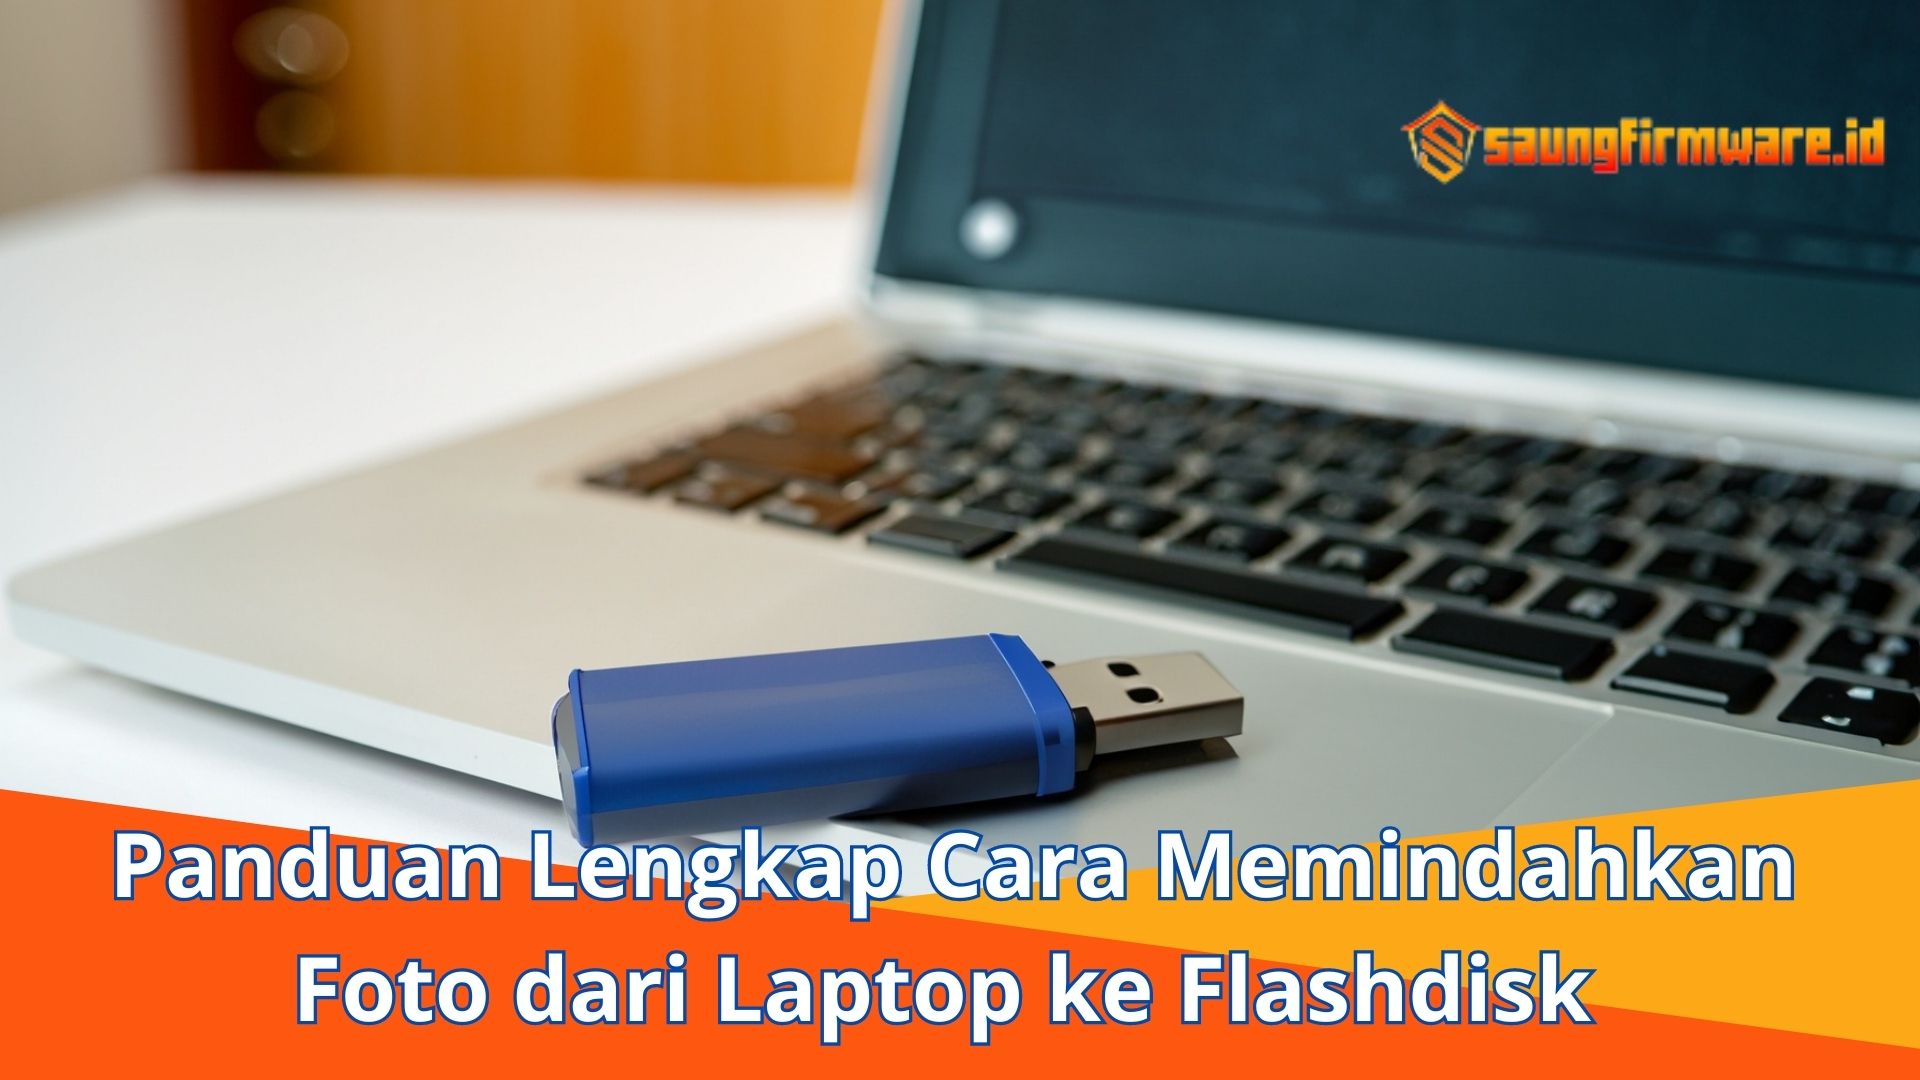 Panduan Lengkap Cara Memindahkan Foto dari Laptop ke Flashdisk